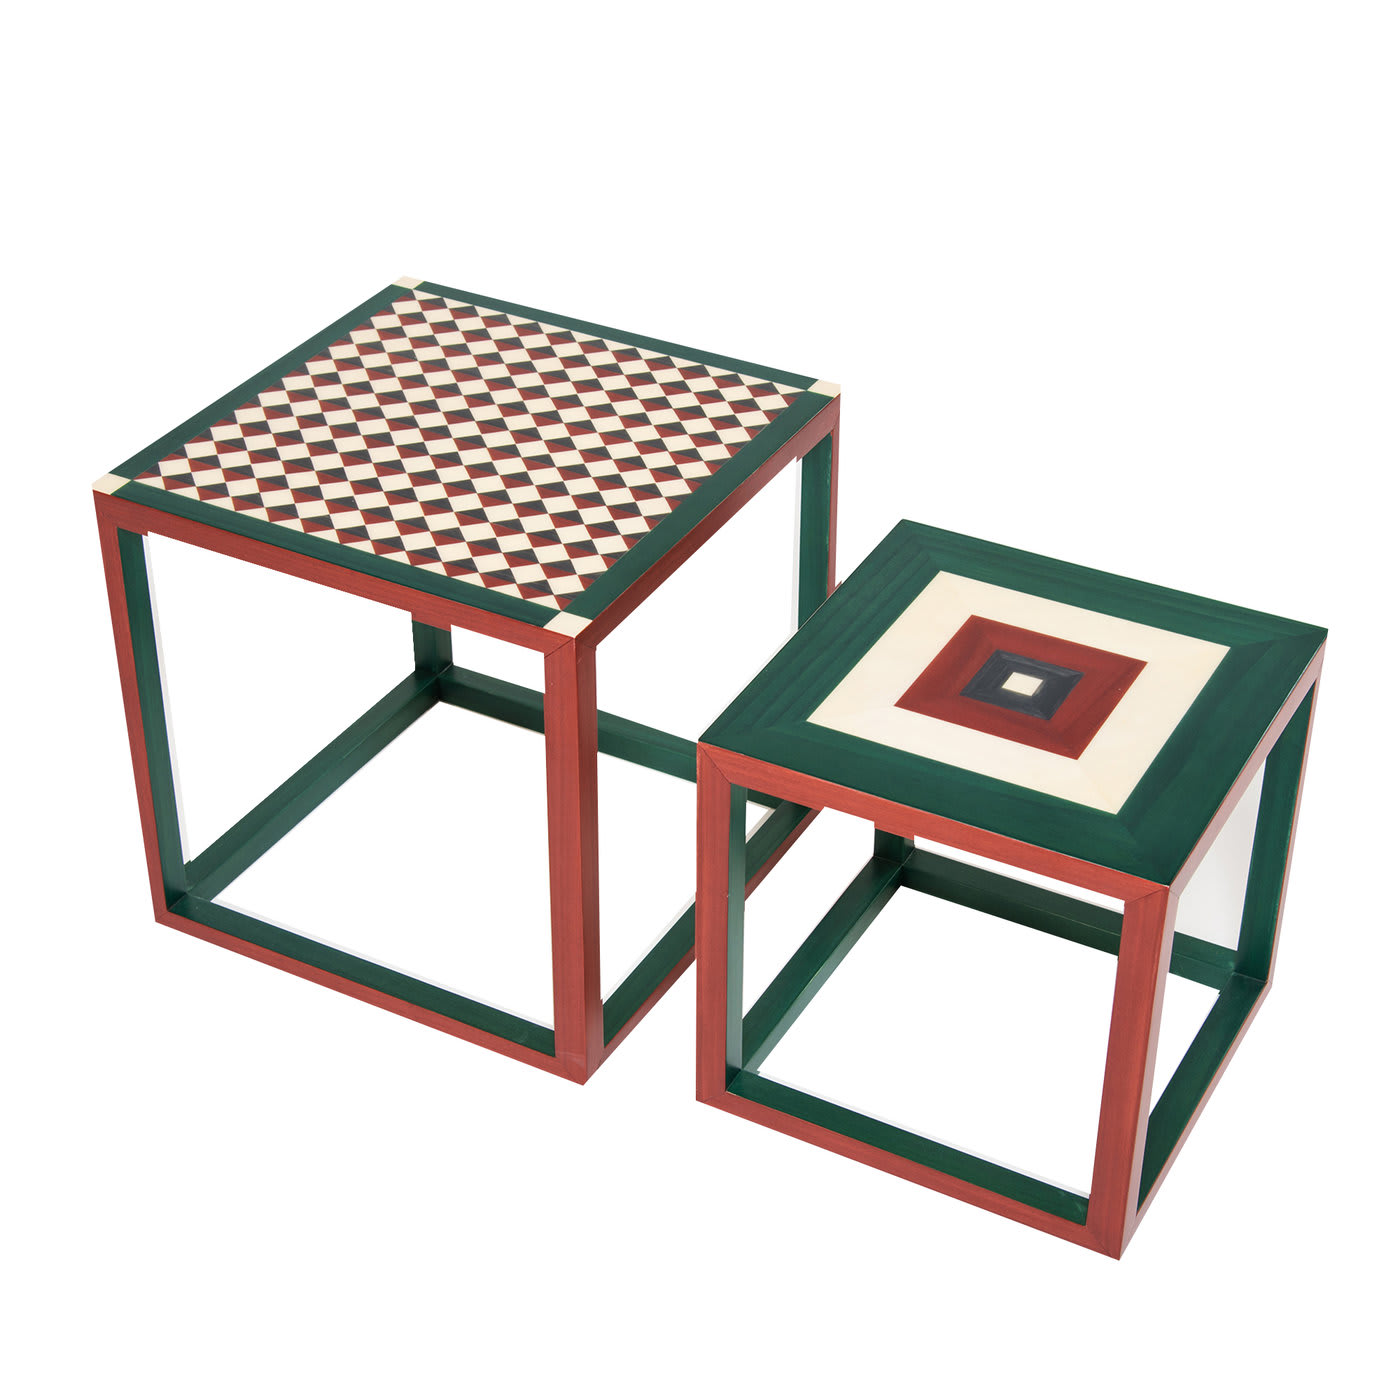 Partenope Green and Red Squares Set of 2 Nesting Tables - Architetti Artigiani Anonimi